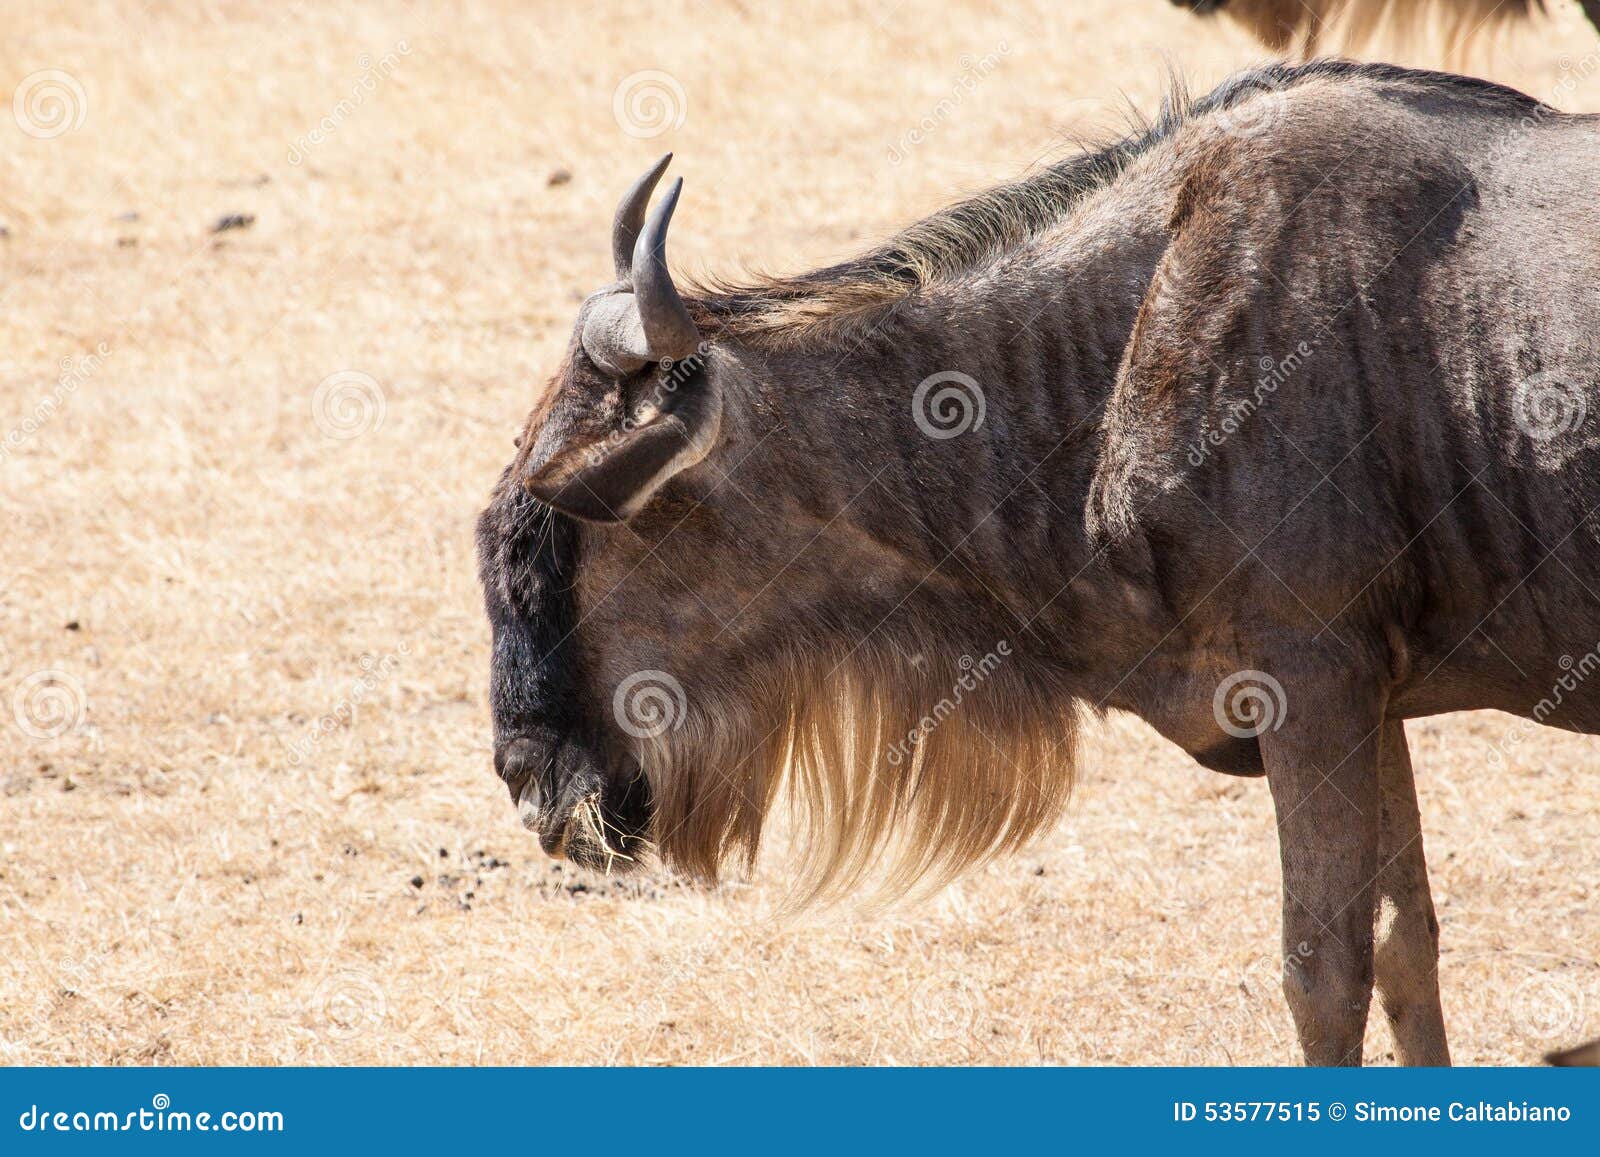 Wild beast stock image. Image of herd, ecology, evening - 53577515